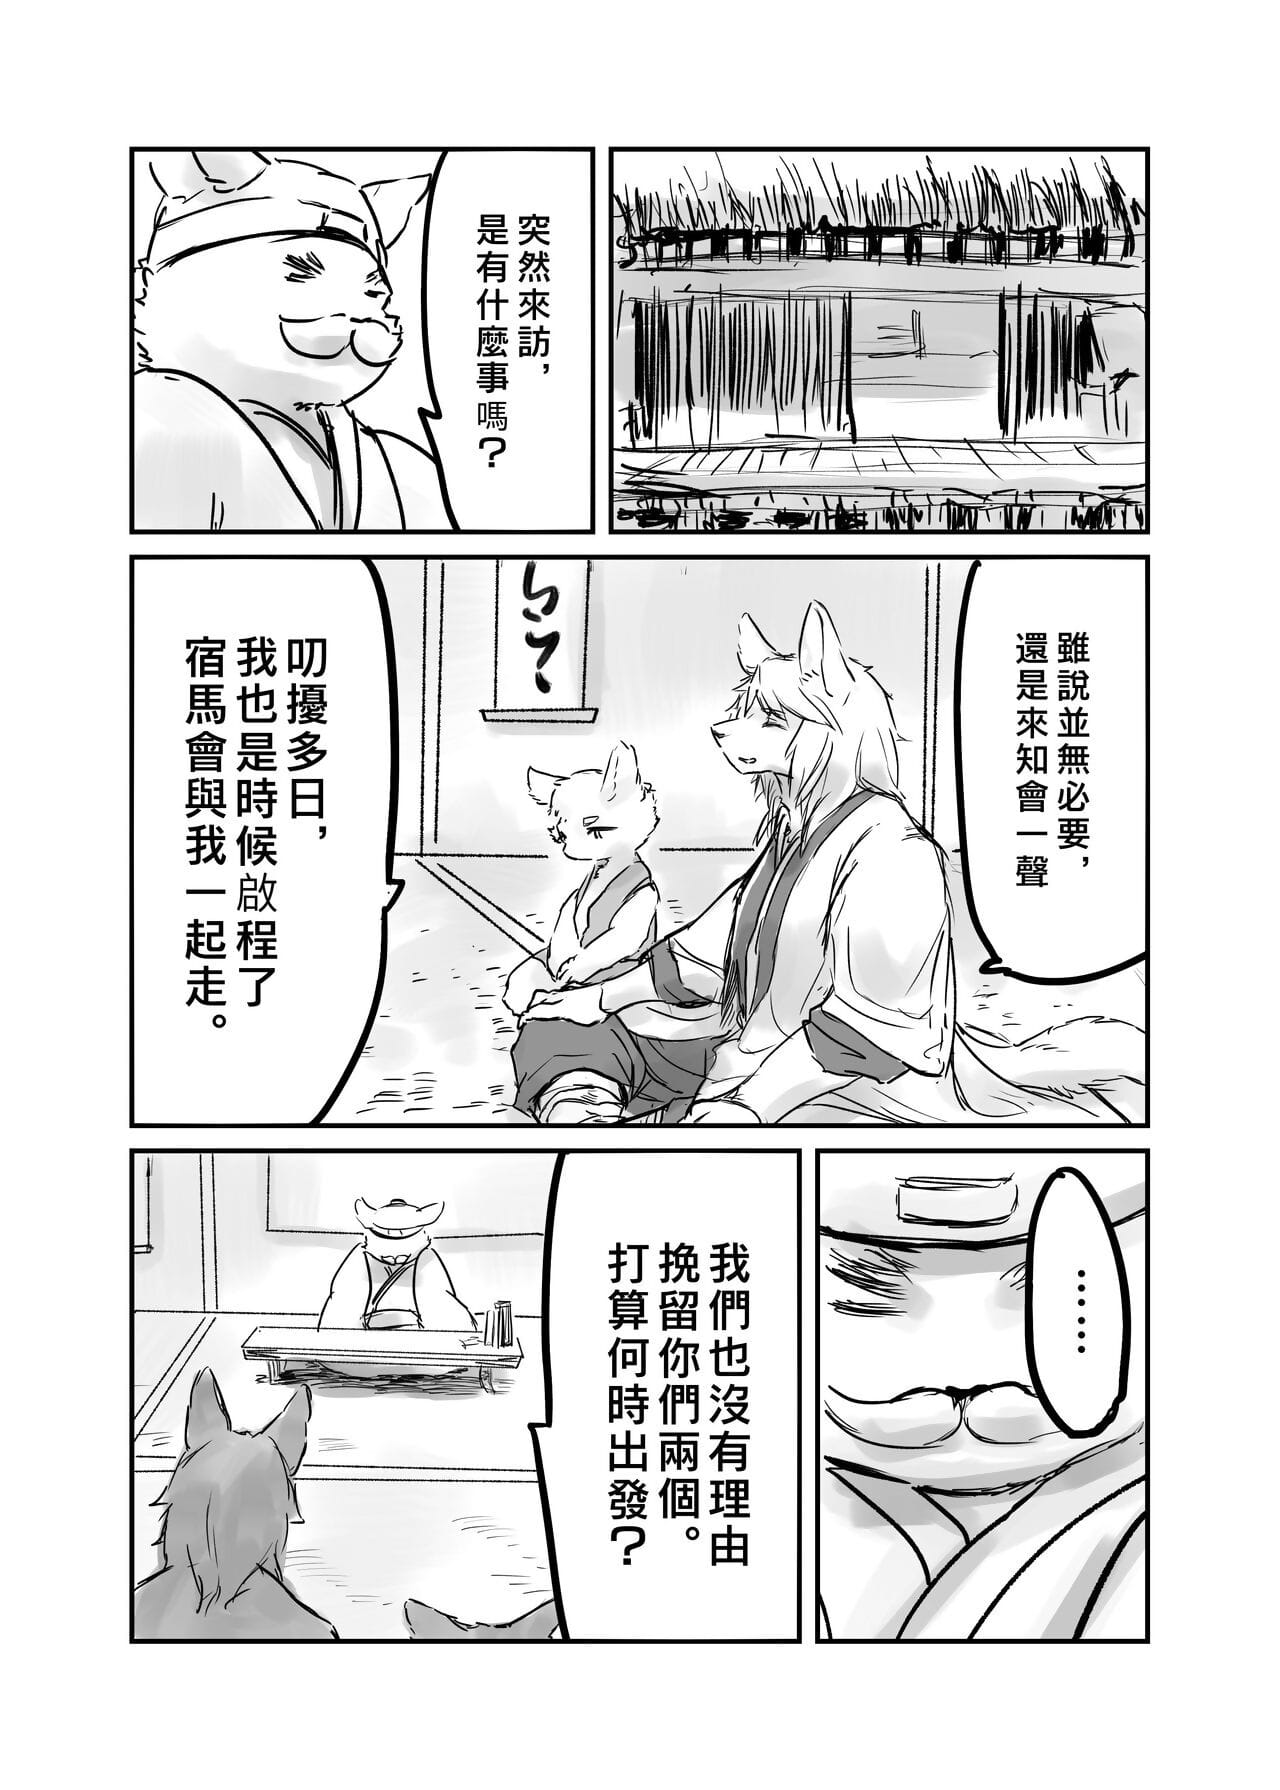 （the ziyaretçi 他乡之人 by：鬼流 PART 2 page 1